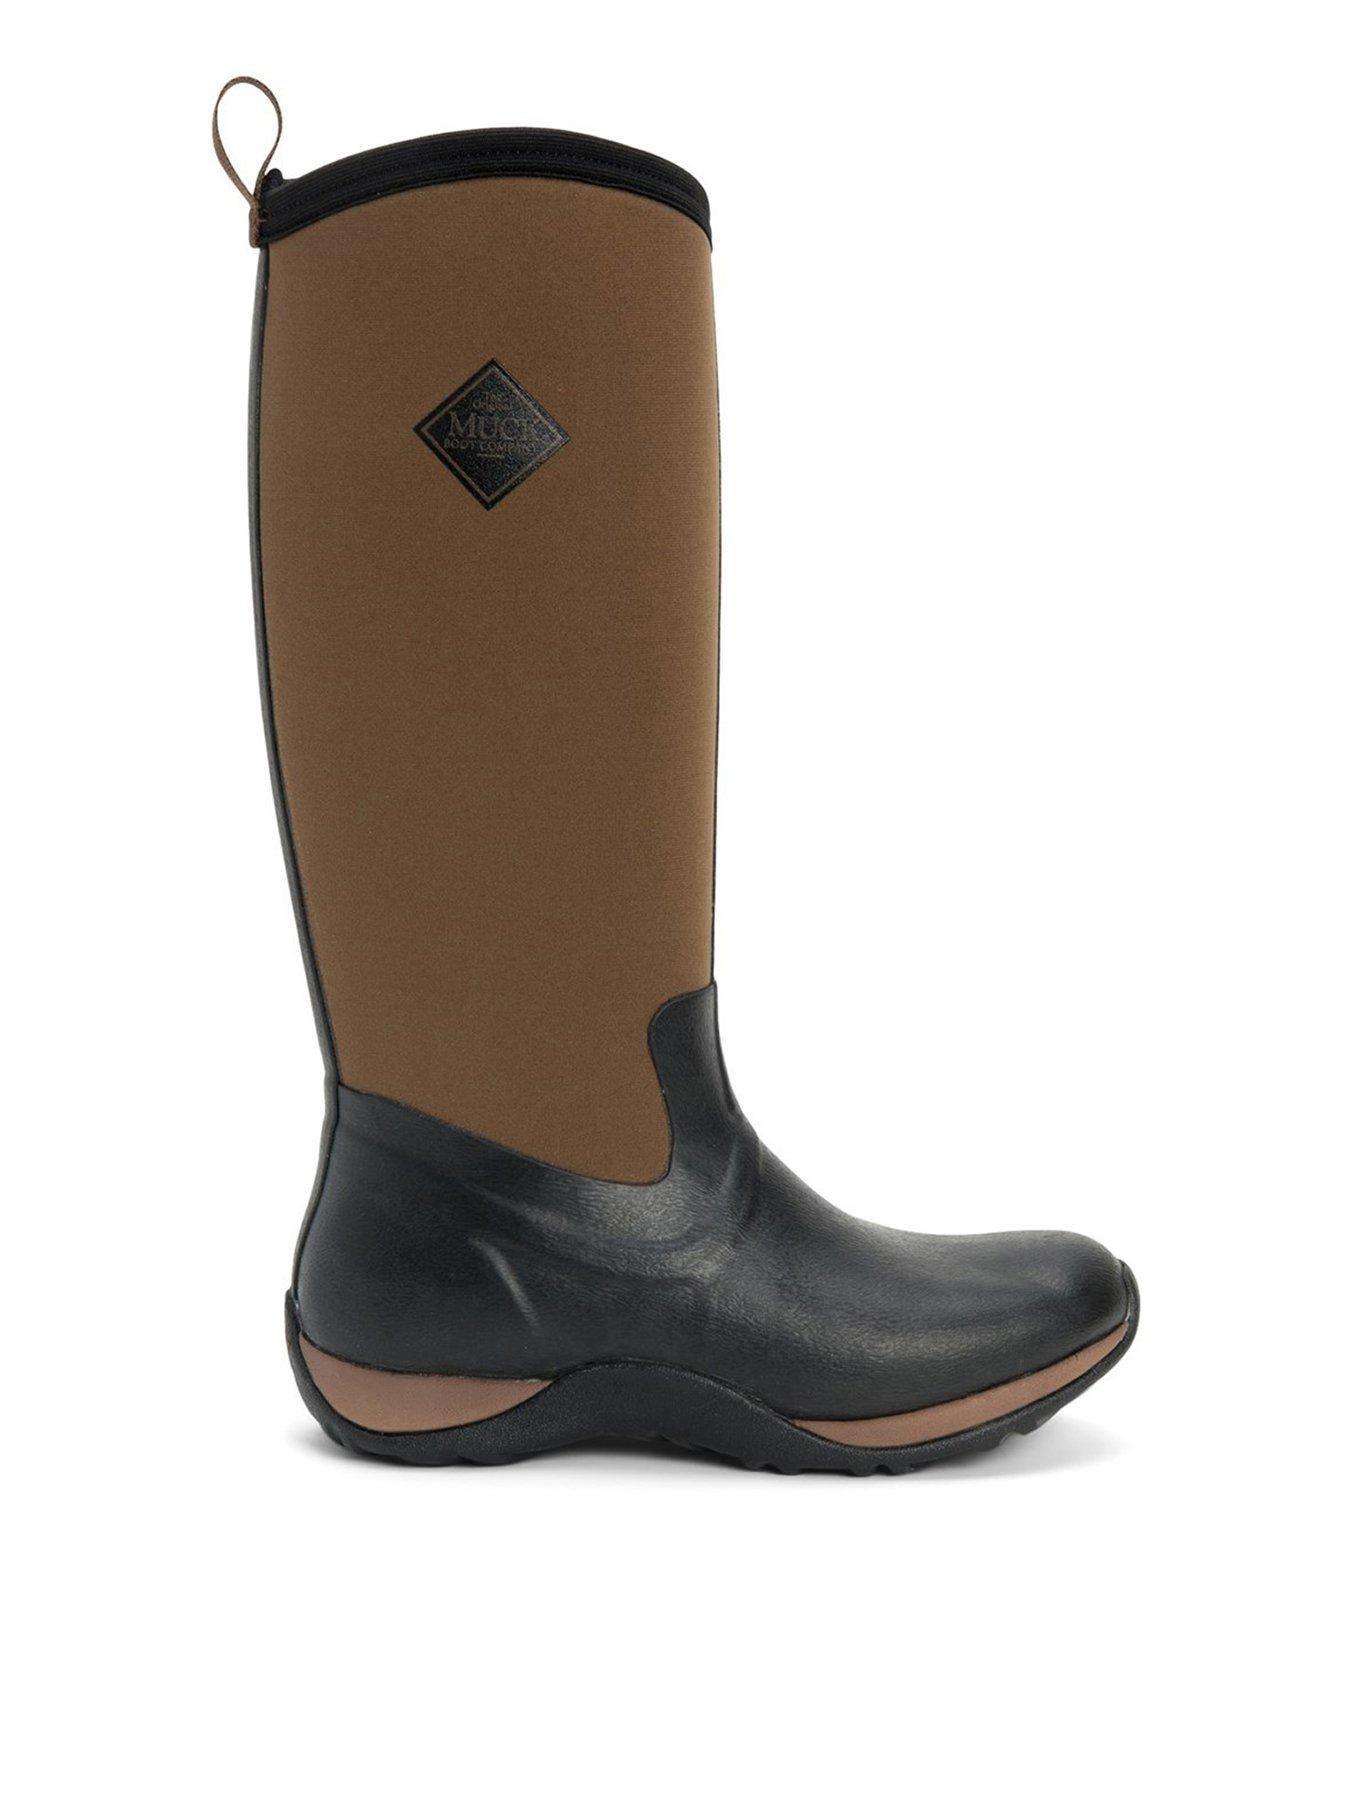 Muck Boots Ladies Arctic Adventure - Black/brown, Black, Size 3, Women